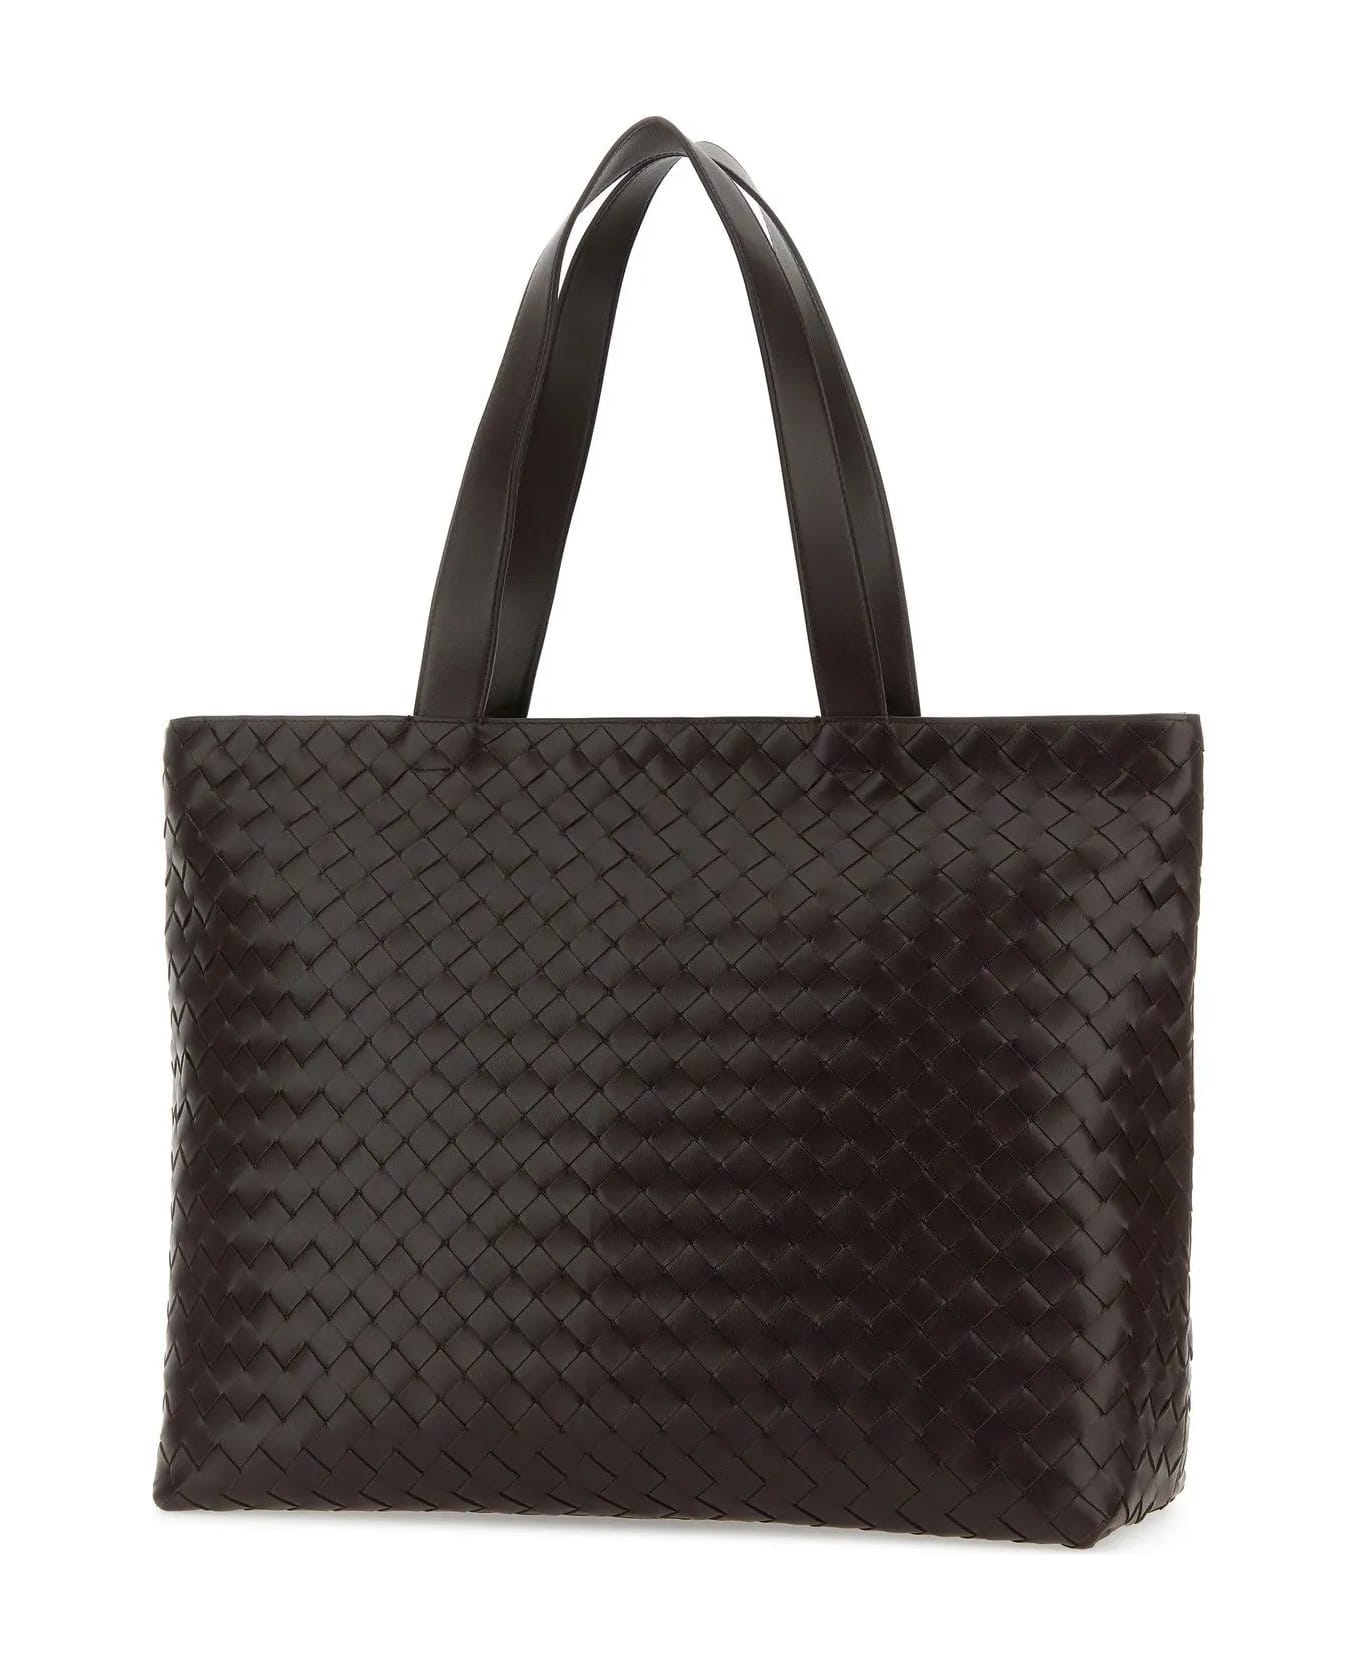 Bottega Veneta Dark Brown Leather Intrecciato Shopping Bag - BROWN